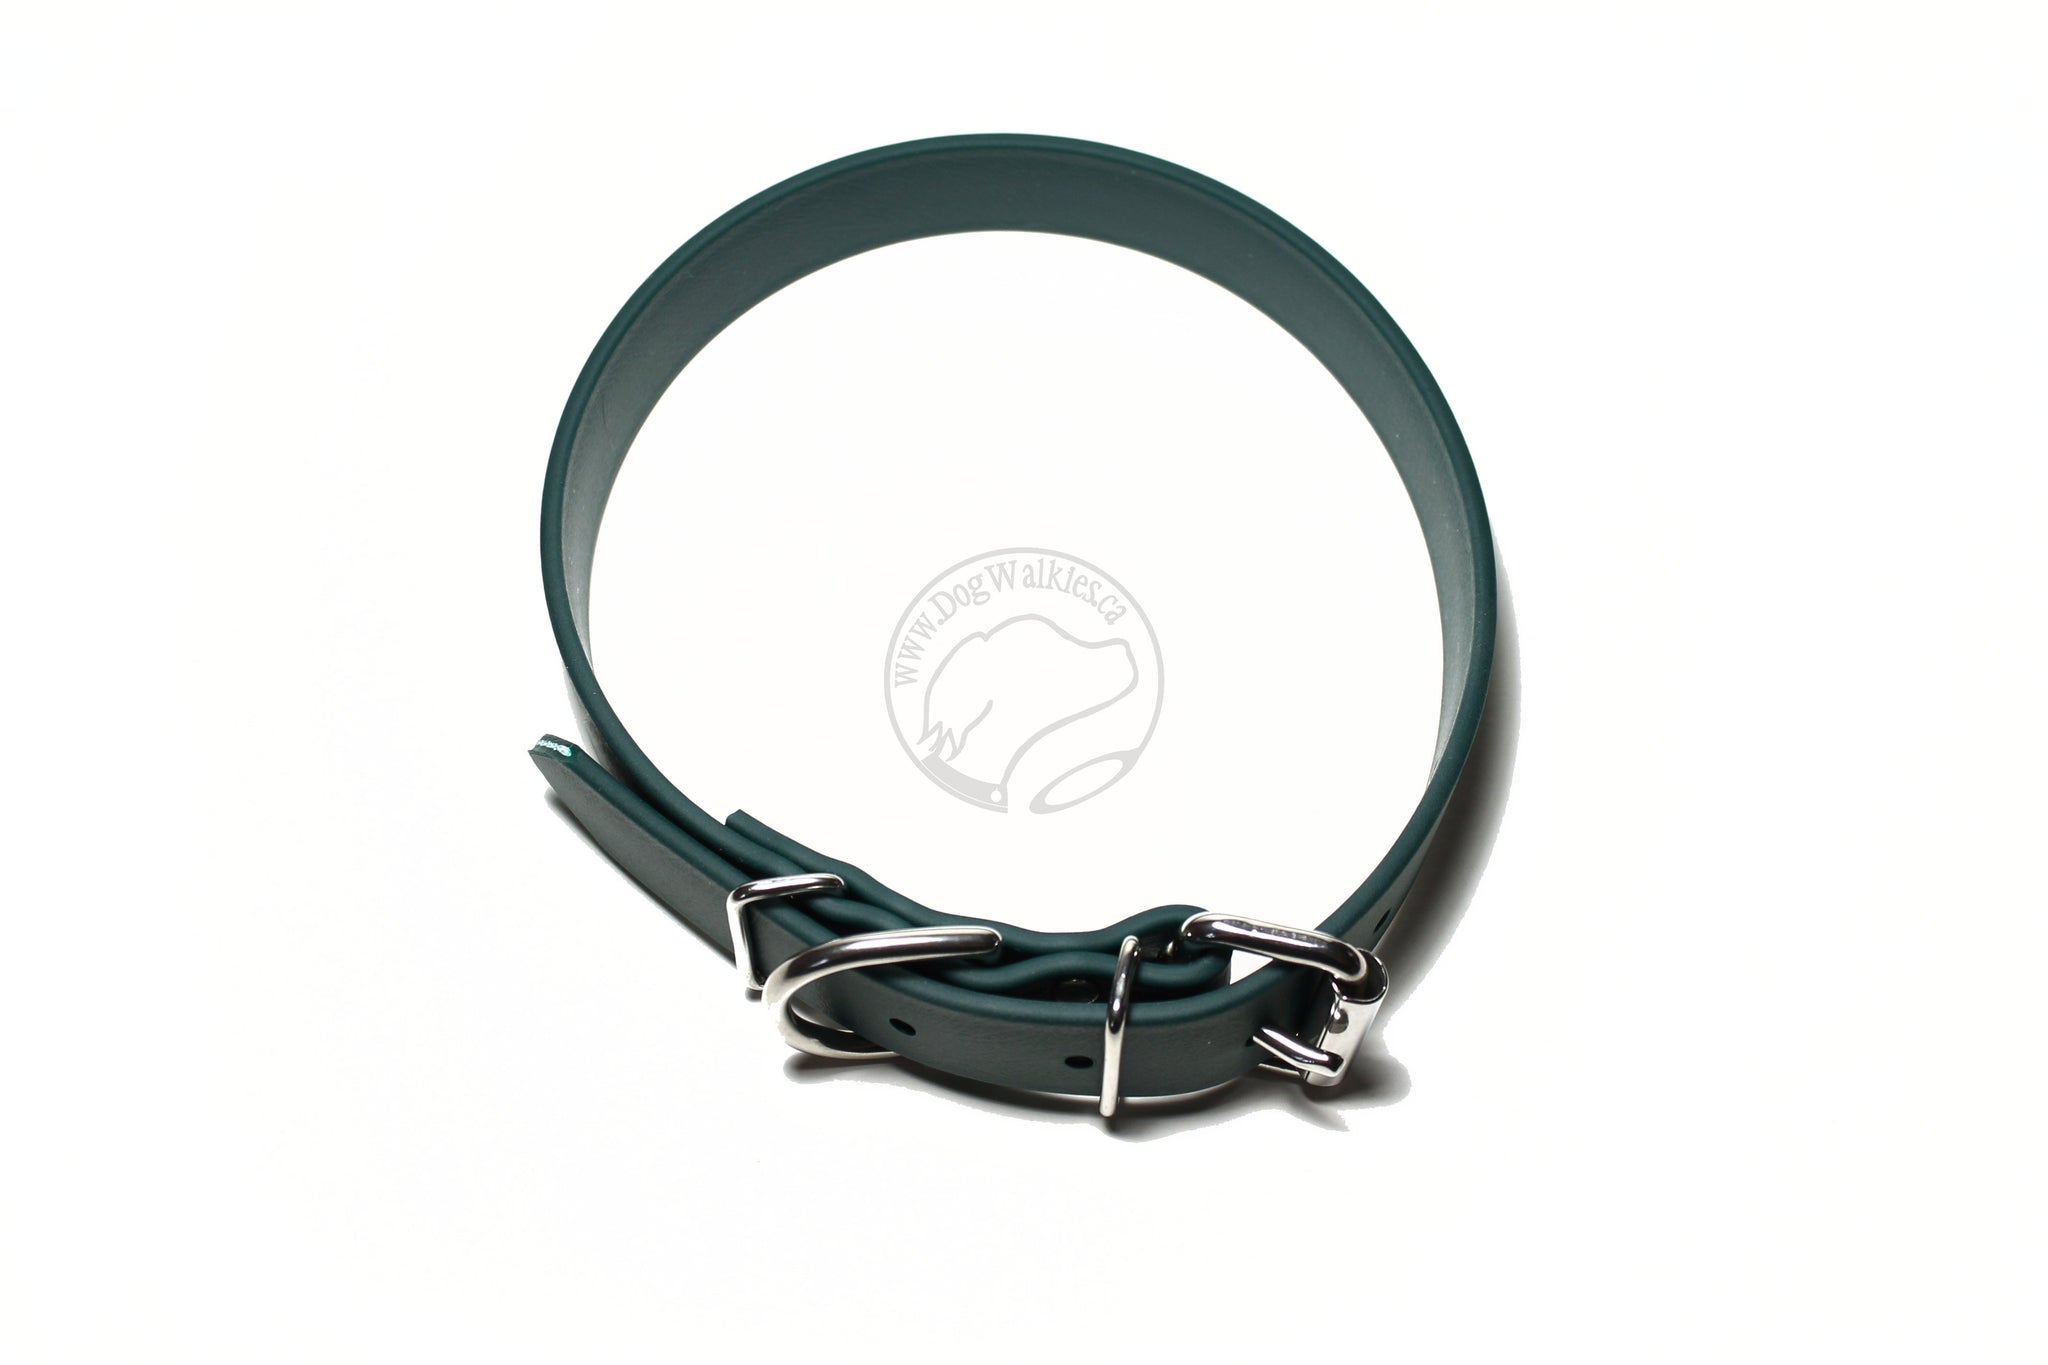 Pine Green Biothane Dog Collar - 1 inch (25mm) wide